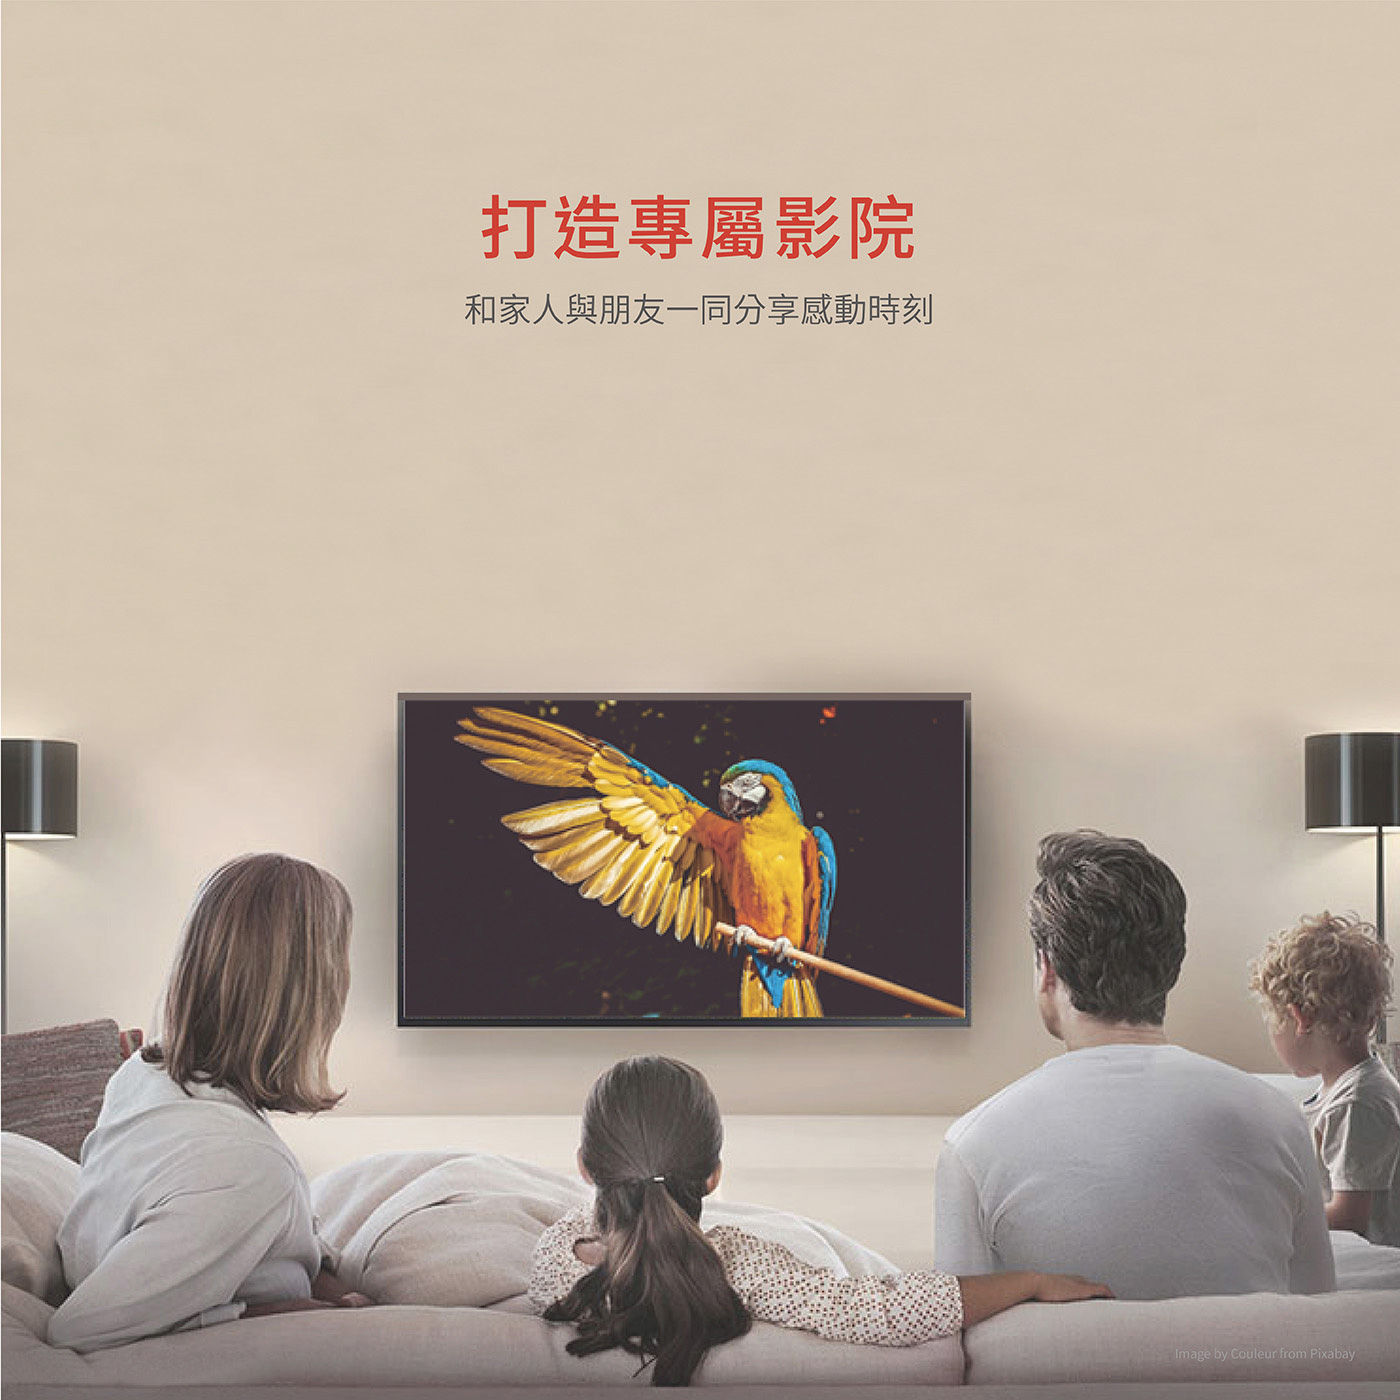 Soodatek 高解析 8K HDMI 影音傳輸線套裝 打造專屬影院，和家人與朋友一同分享感動時刻